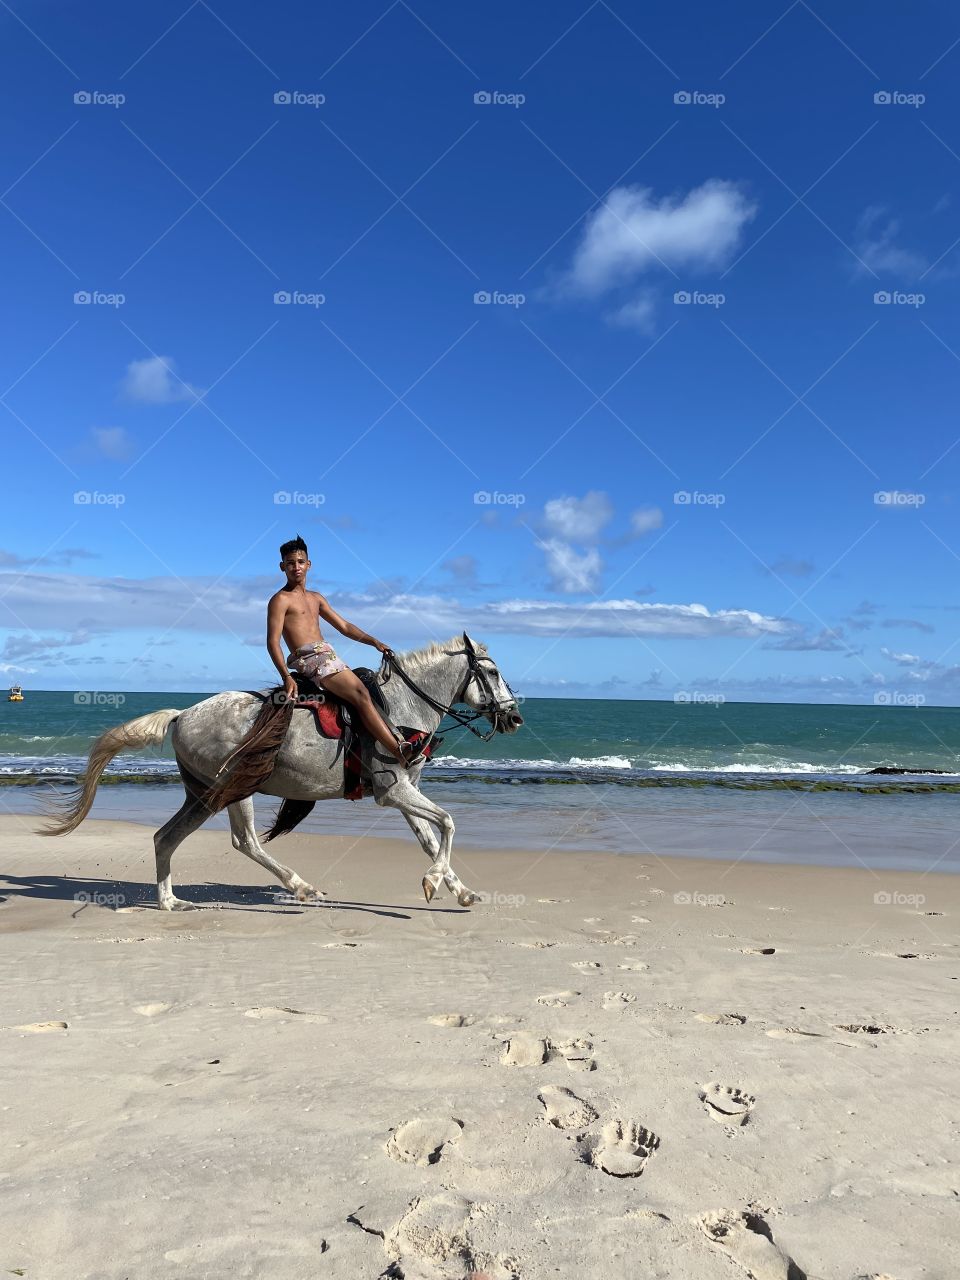 Man smiling on horseback on the beach